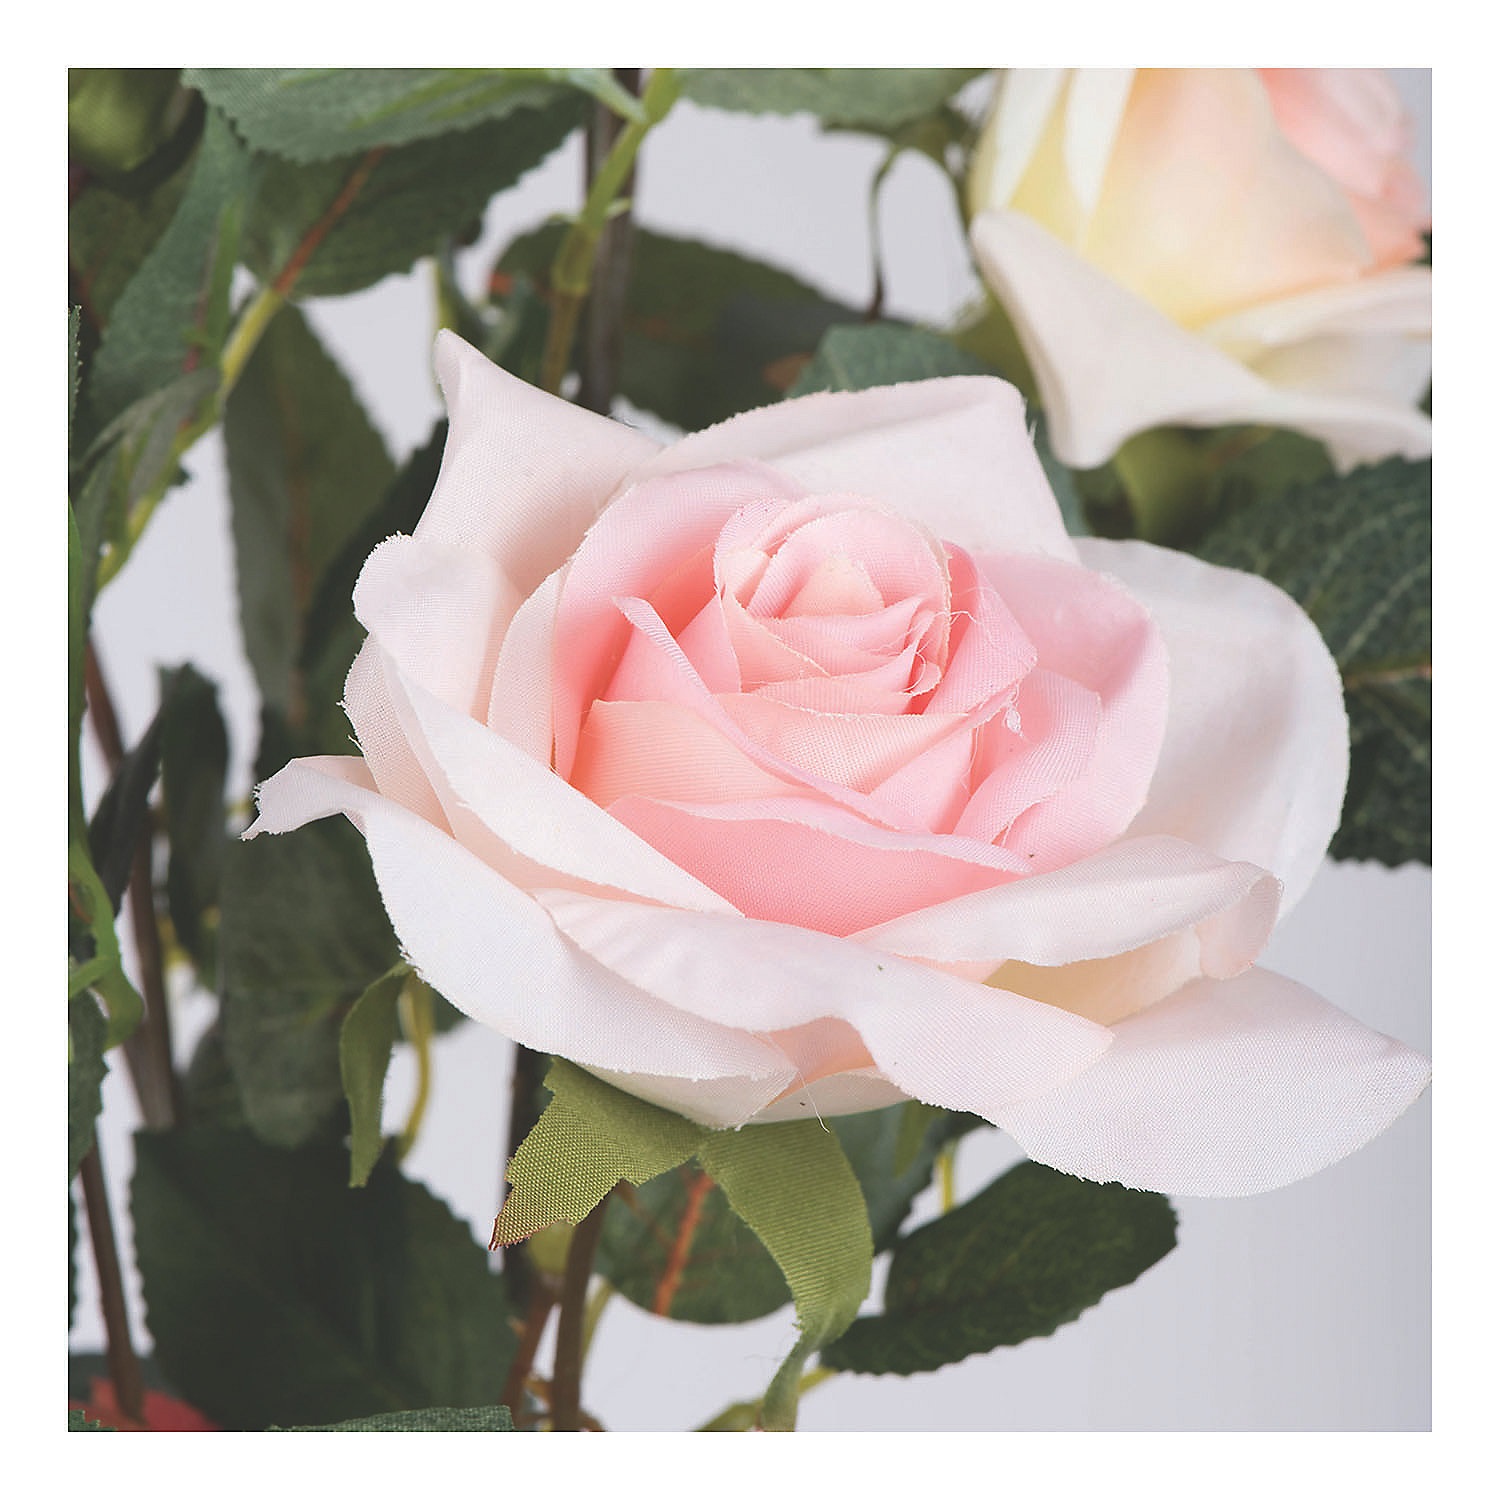 vickerman-21-artificial-pink-rose-plant-in-pot_13938899-a01